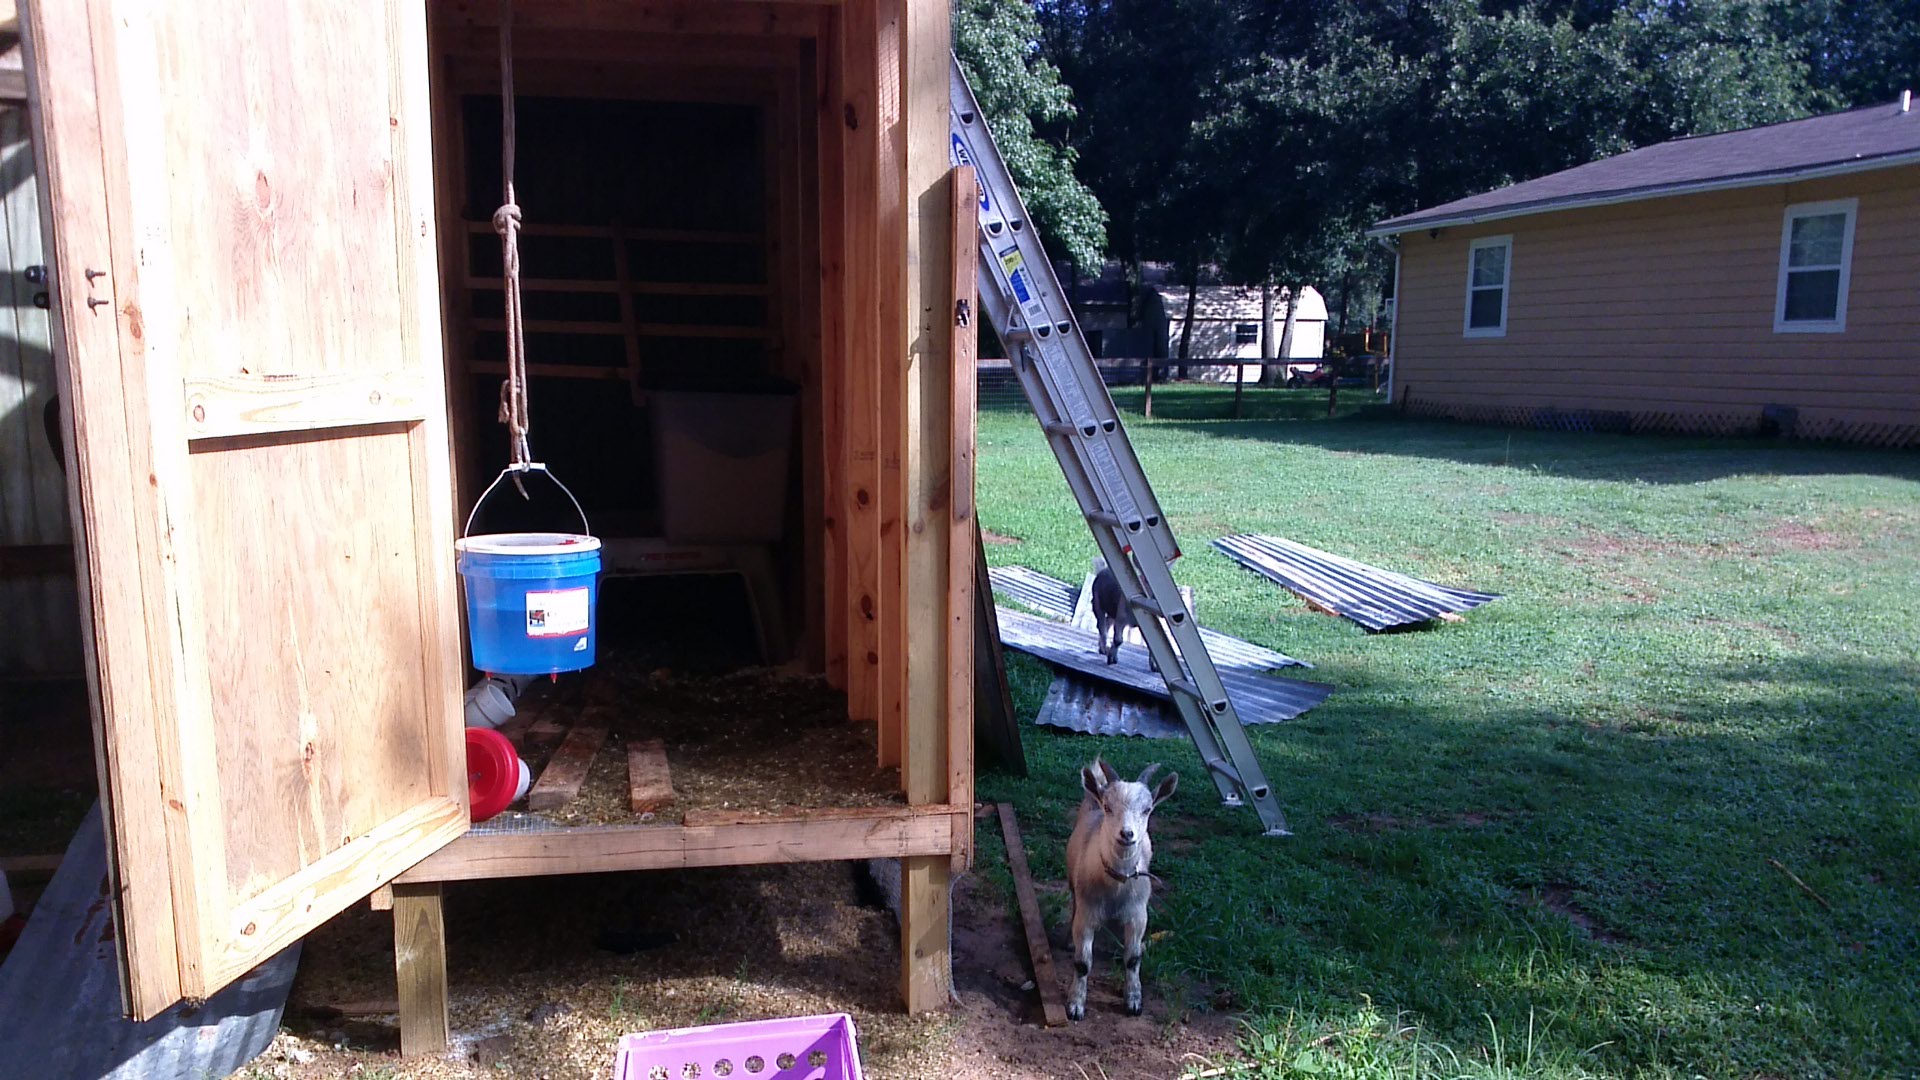 Coop/goat barn in progress